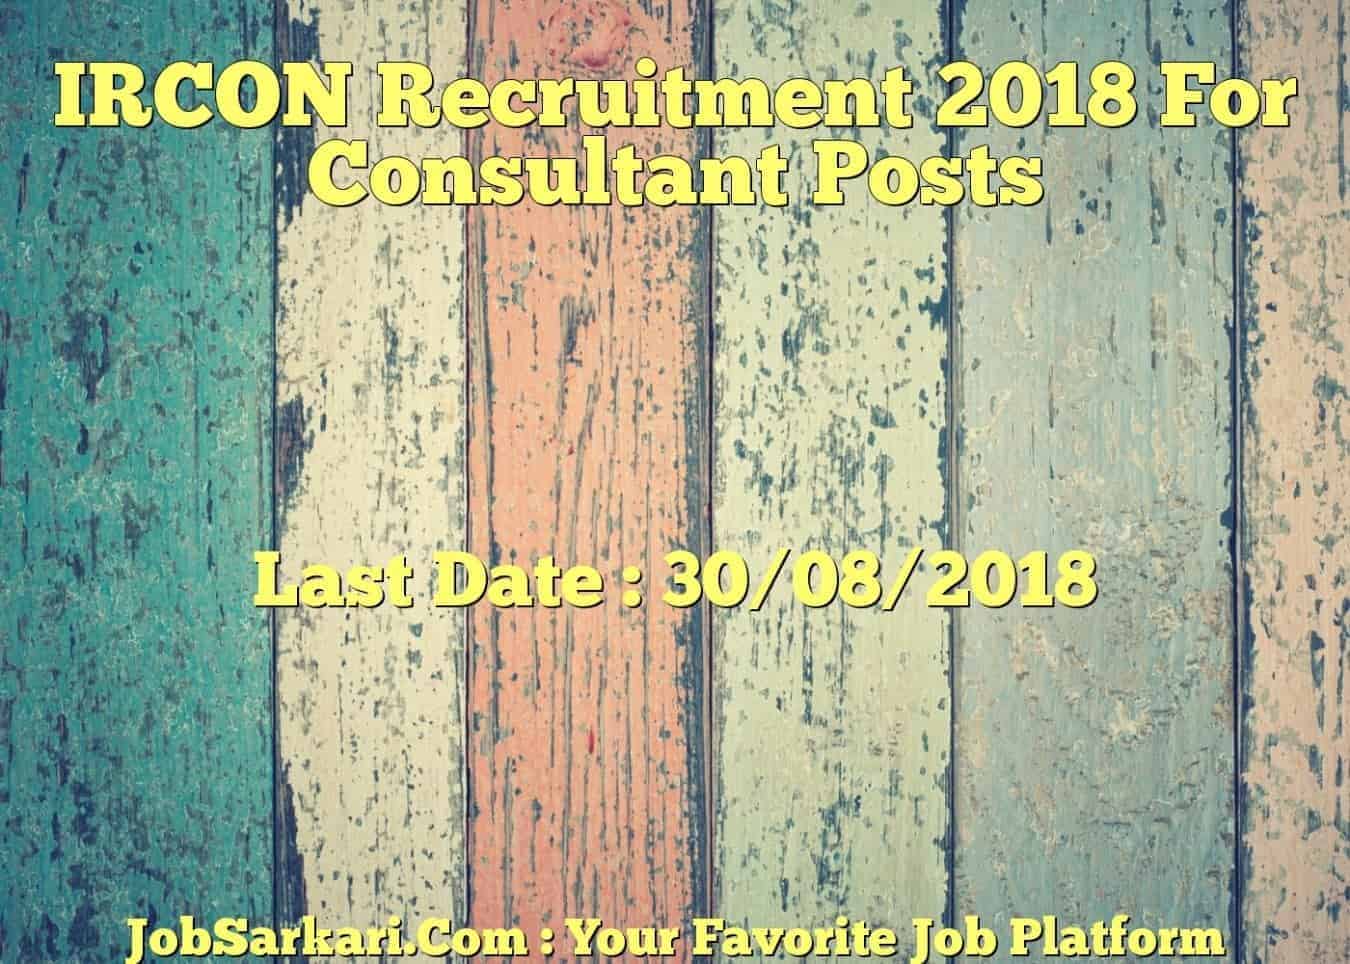 IRCON Recruitment 2018 For Consultant Posts